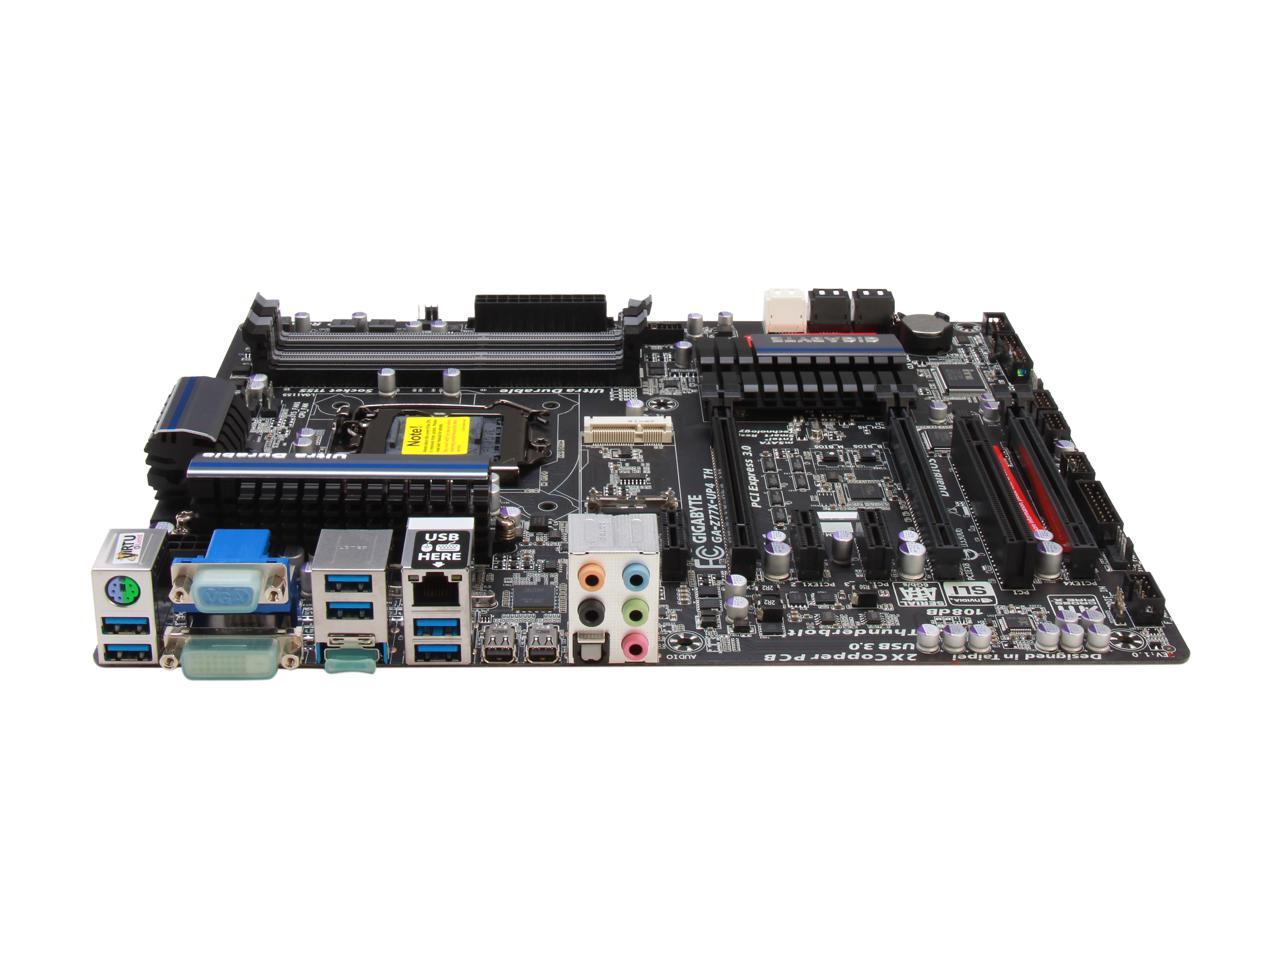 GIGABYTE GA-Z77X-UP4 TH LGA 1155 ATX Intel Motherboard with Dual 